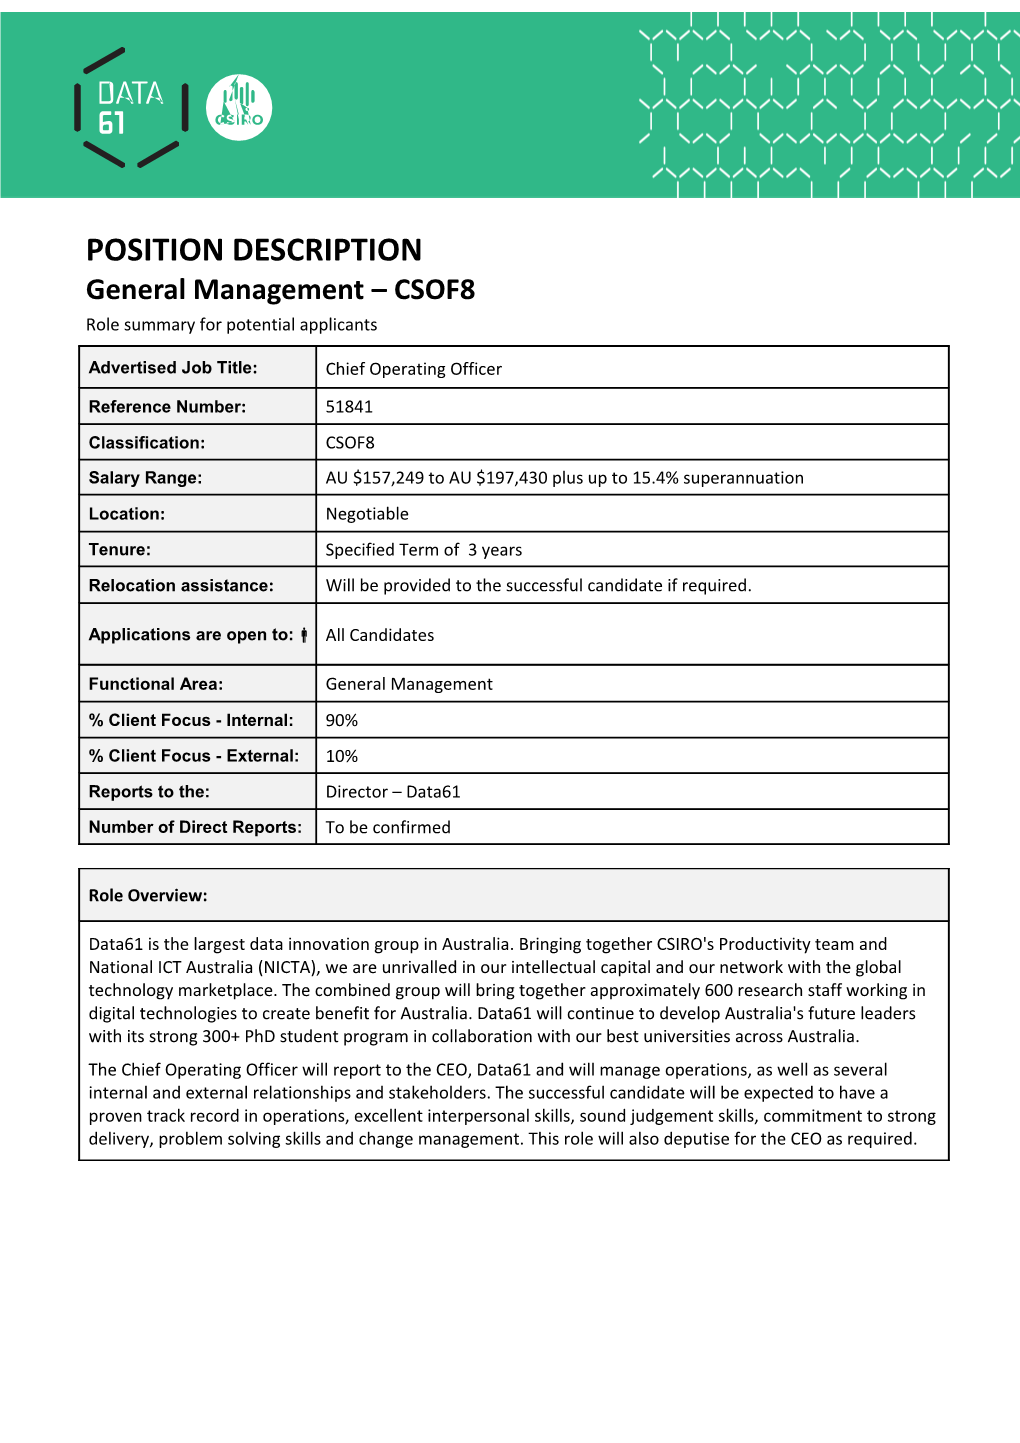 Position Details - Research Scientist/Engineer - CSOF7